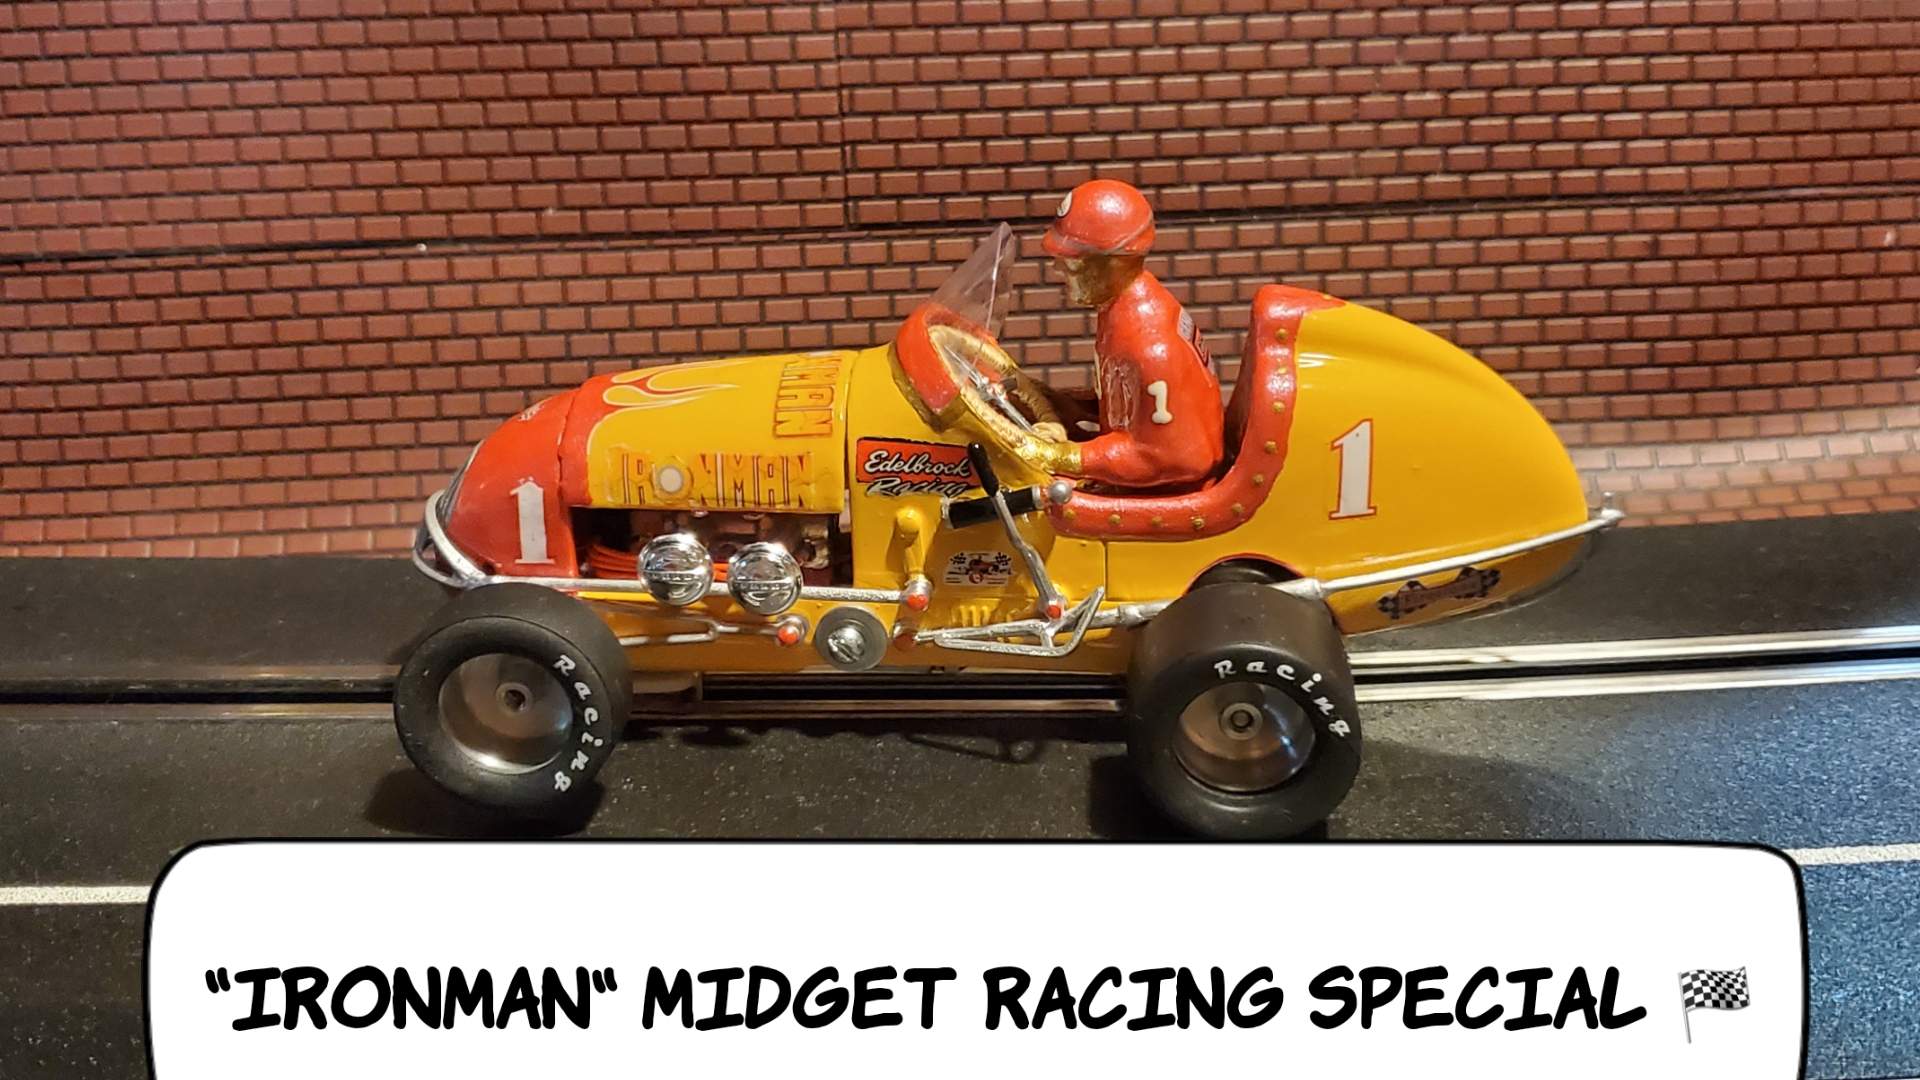 *Sale*, Save $25 off our Ebay Sale Price $299, Reg $349.99 Store Sale Price * Monogram Midget Racer “IronMan” Racing Special 1/24 Scale Slot Car 8